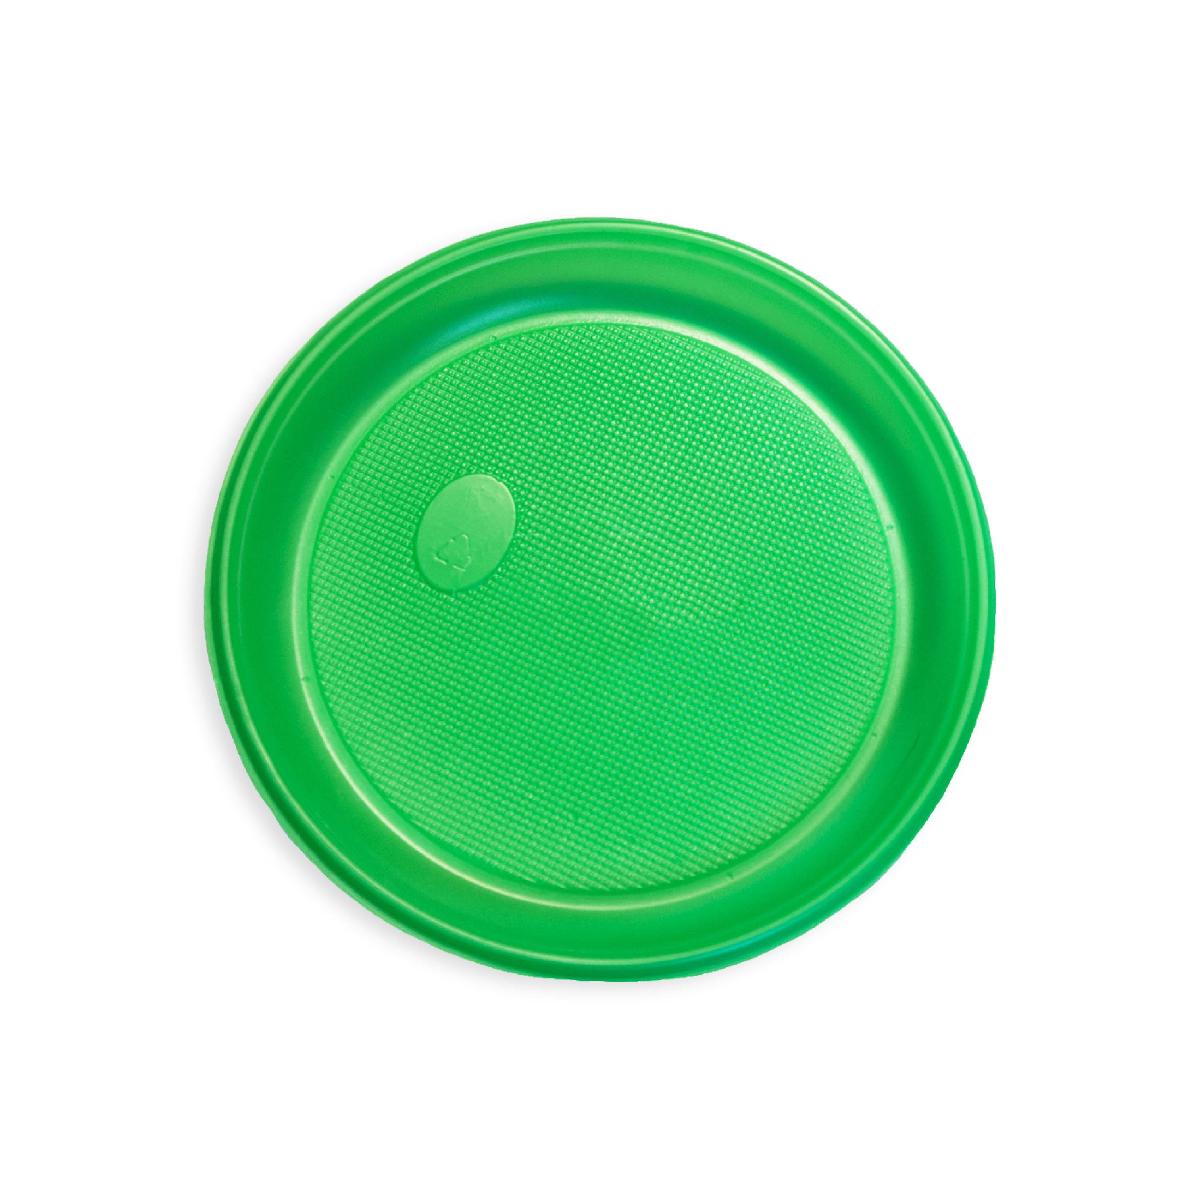 Тарелка пластиковая 165мм зеленая (О) (100/2400)